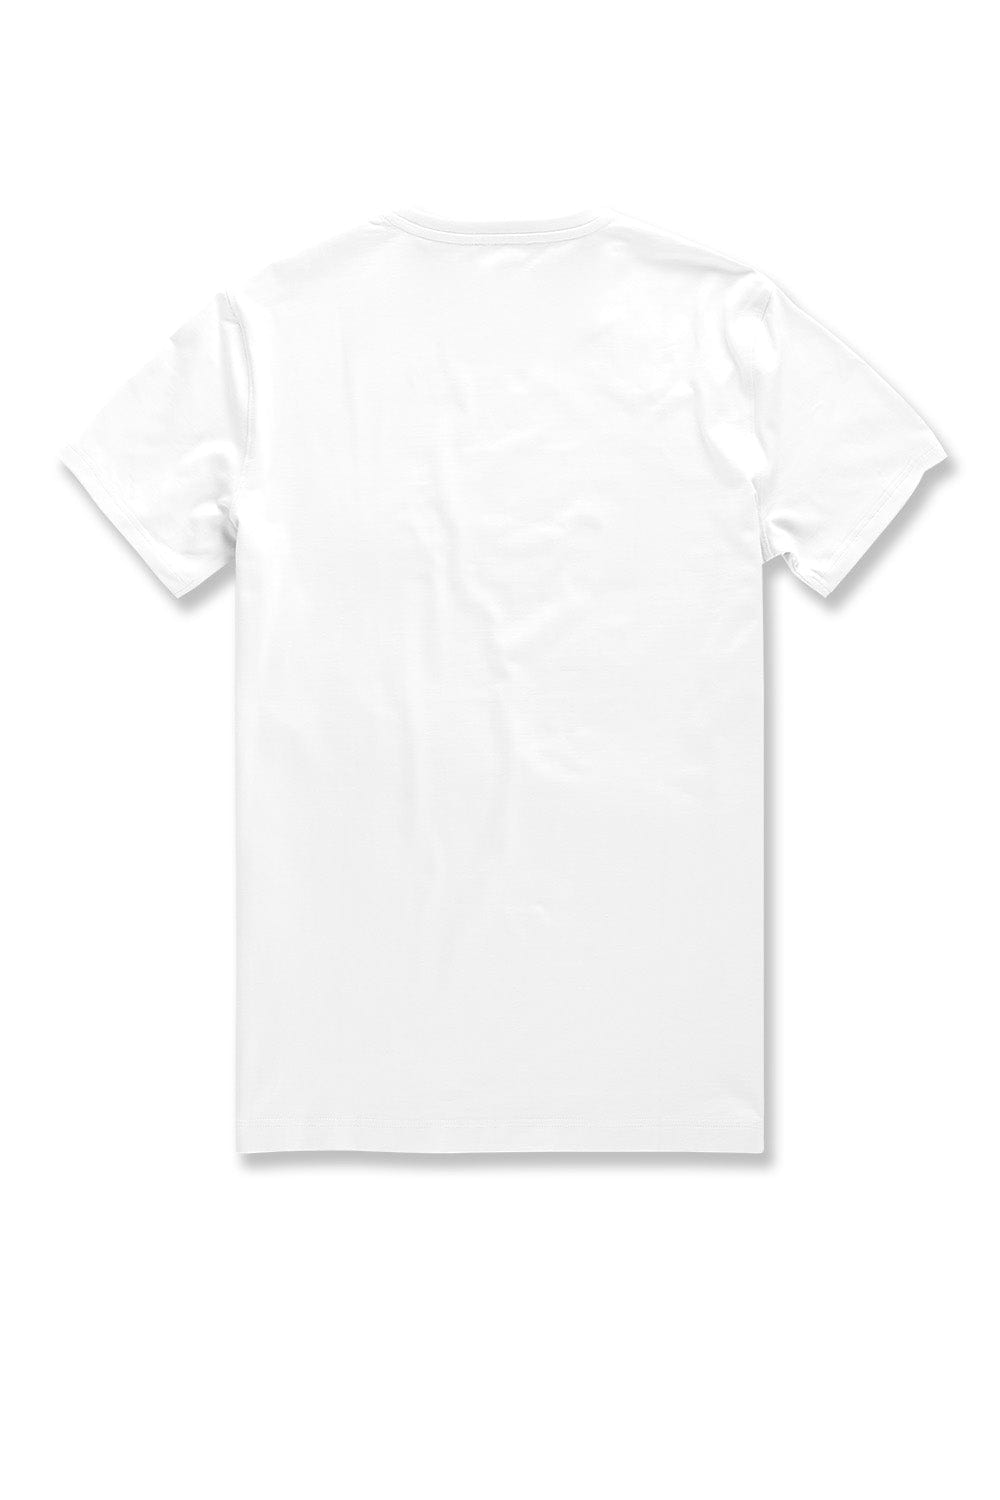 JC Big Men Big Men's Premium Crewneck T-Shirt (White)